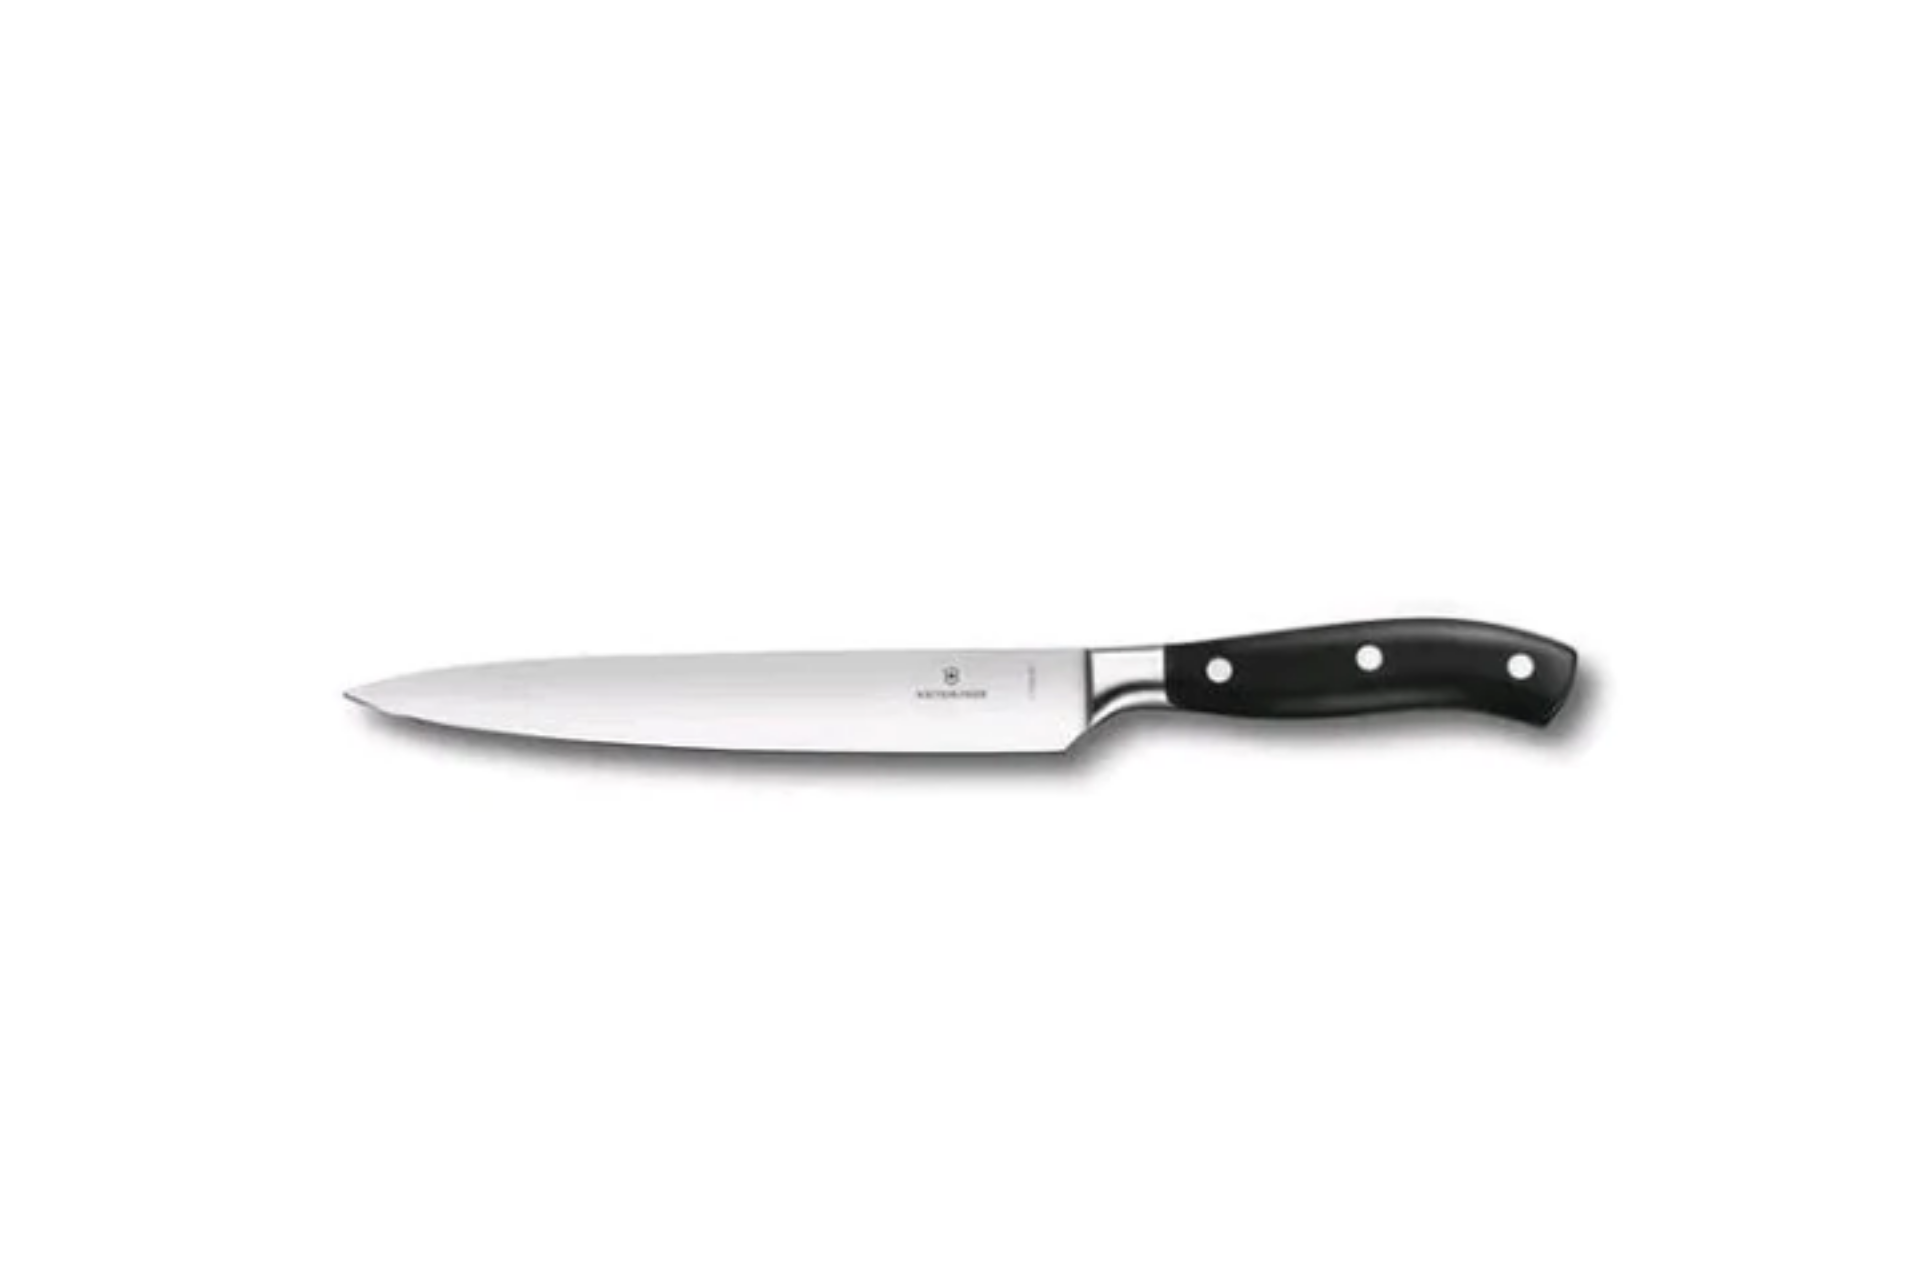 Wusthof Classic Ikon 6" Flexible Fillet Knife